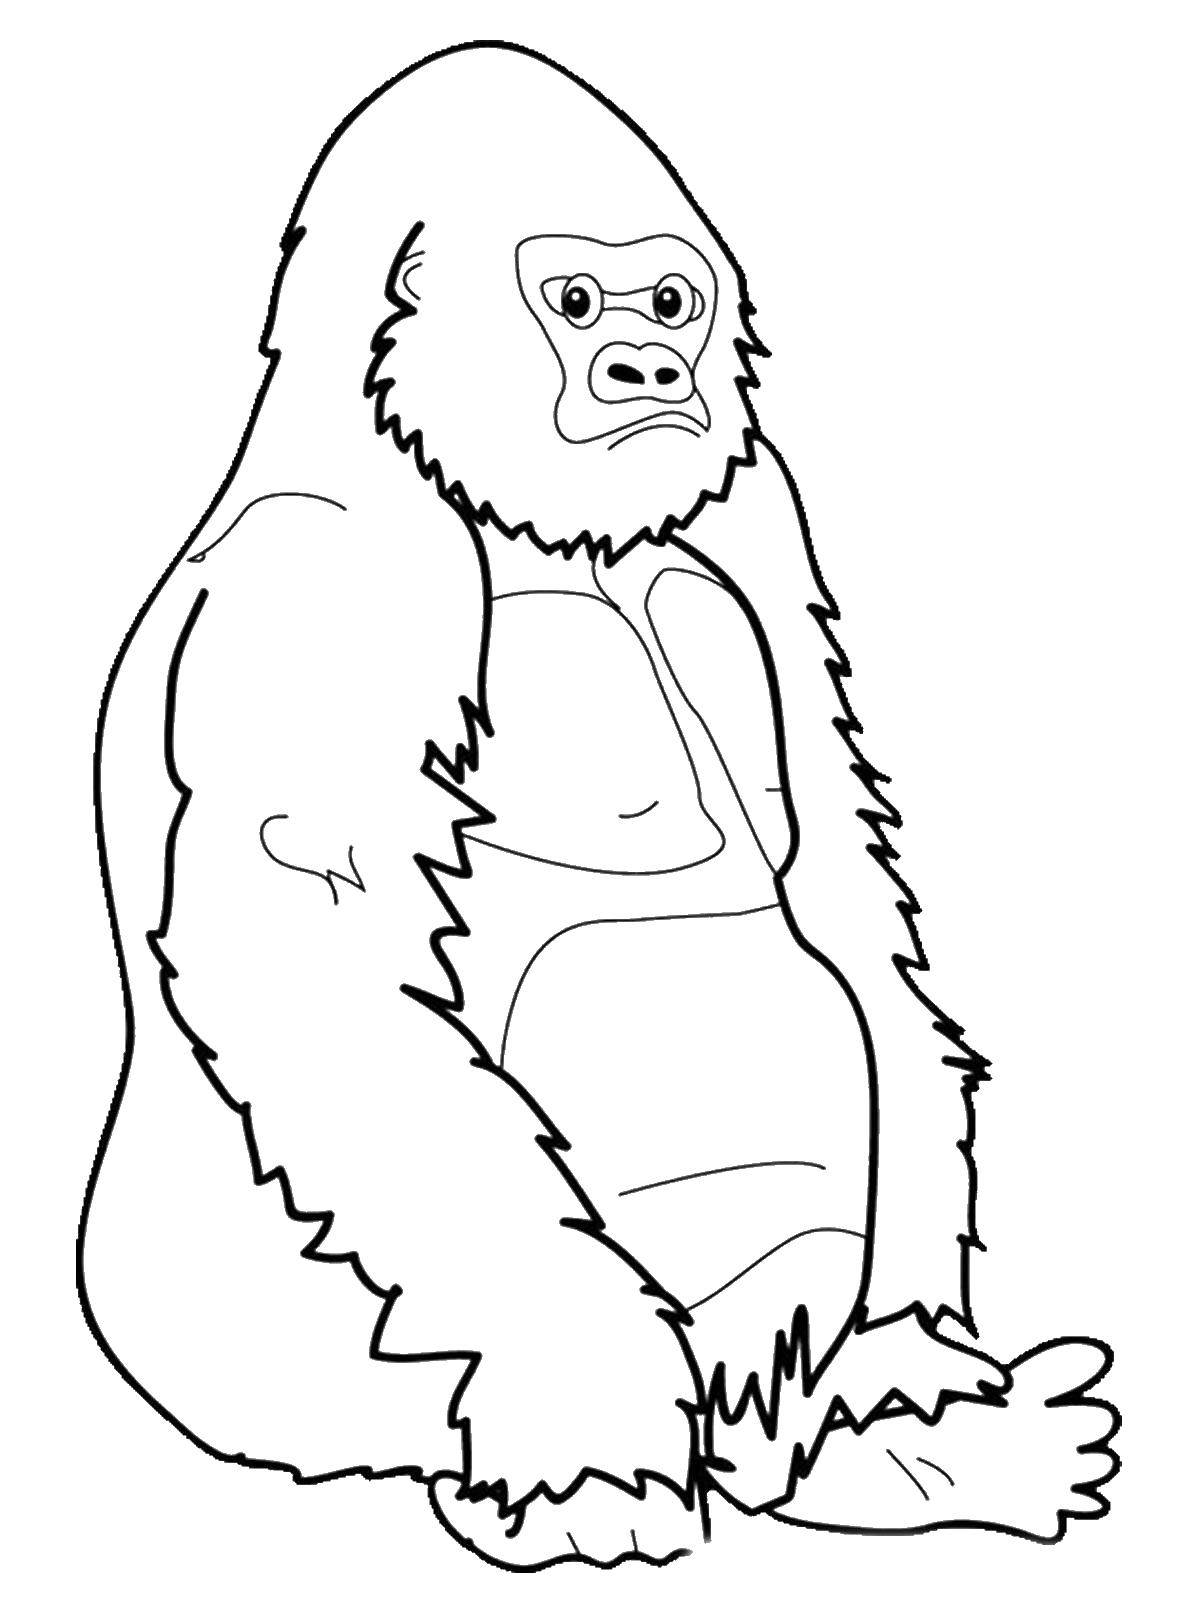 Coloring Gorilla. Category Animals. Tags:  gorilla.